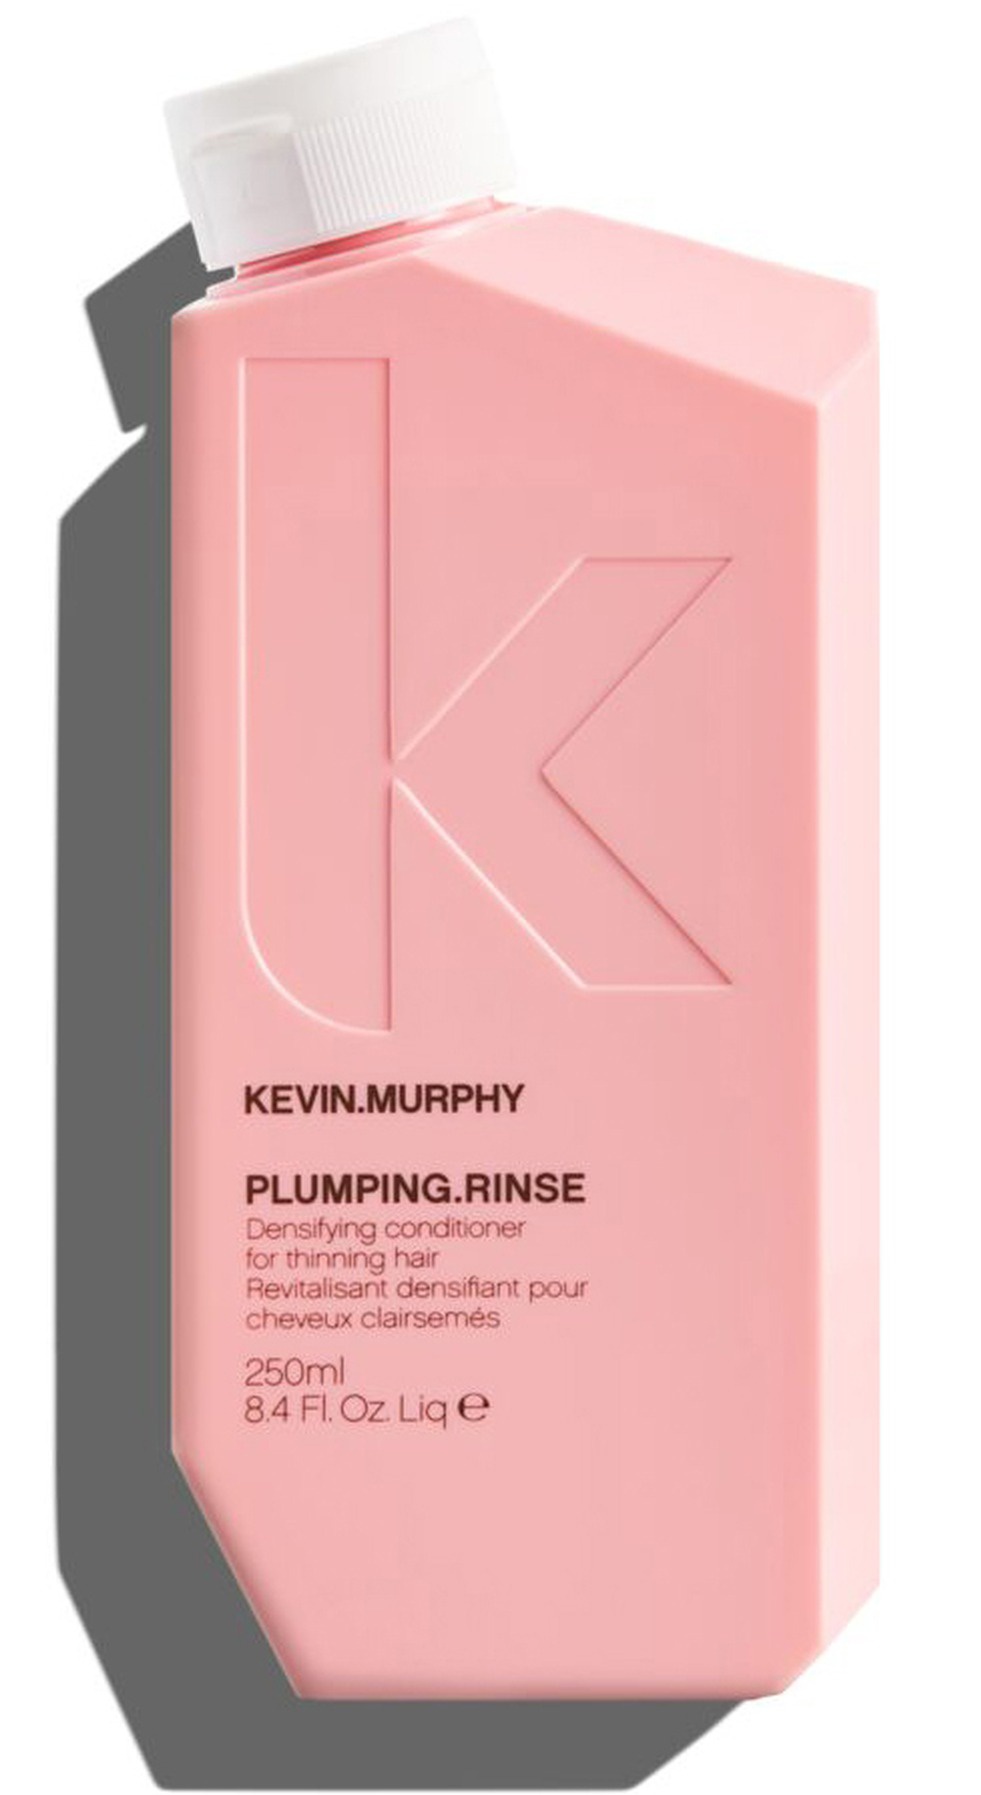 Kevin Murphy Plumping.rinse